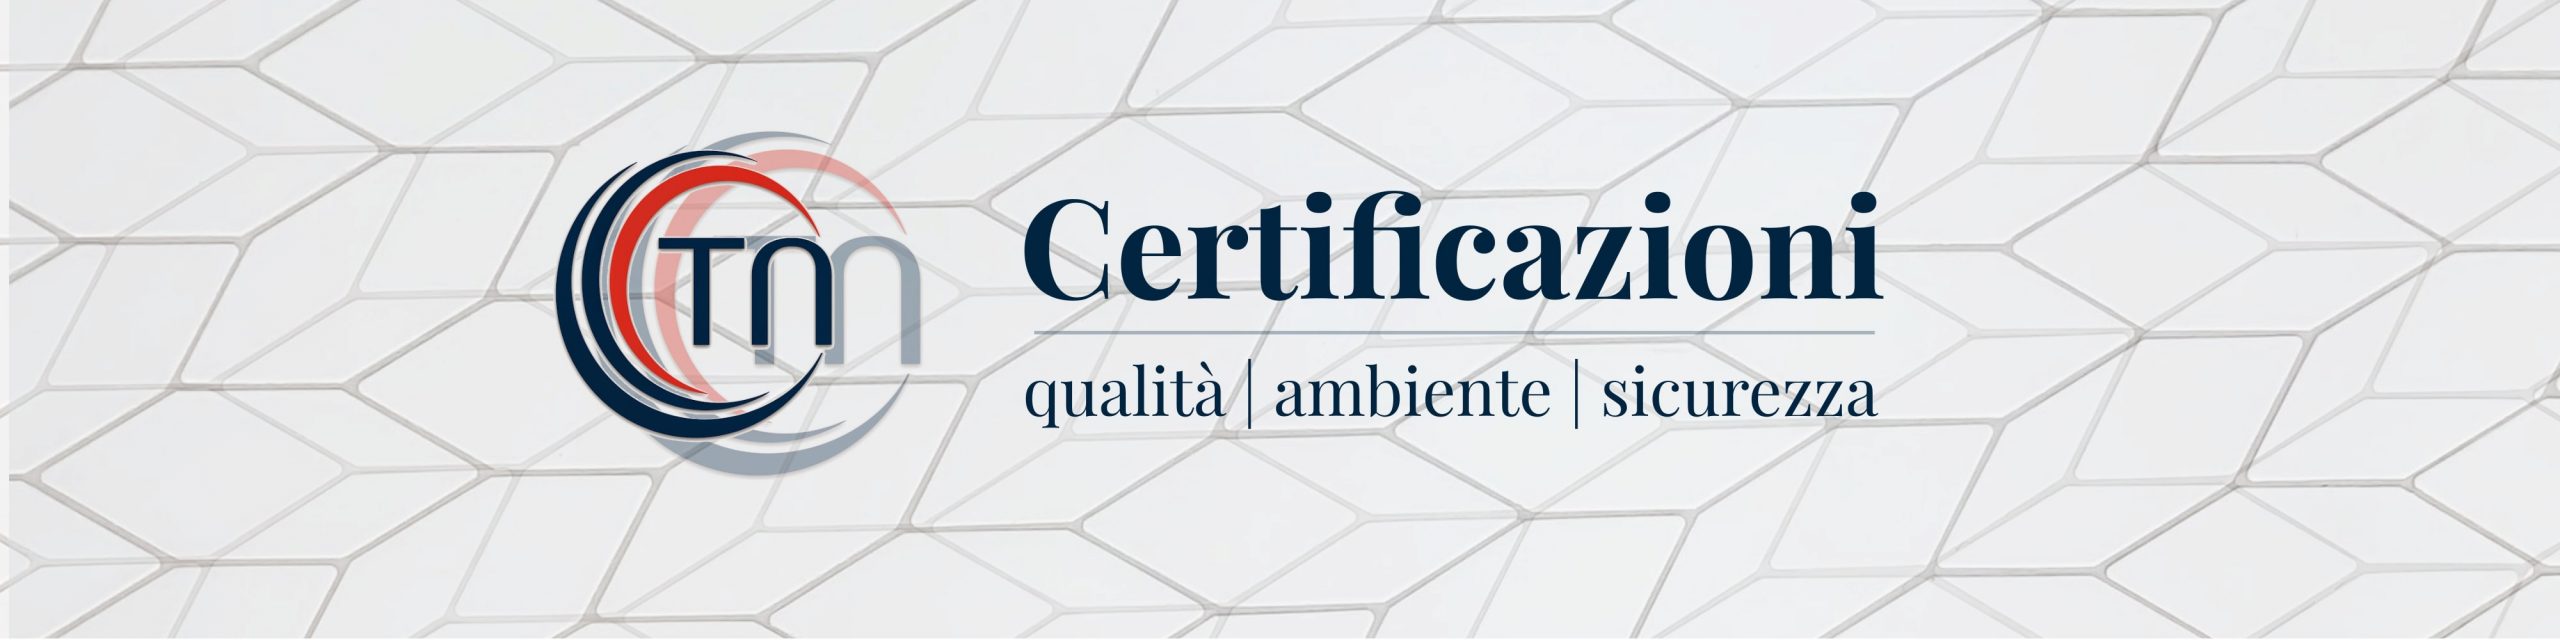 NICOLETTI-certifications-COVER-v03 - narrow